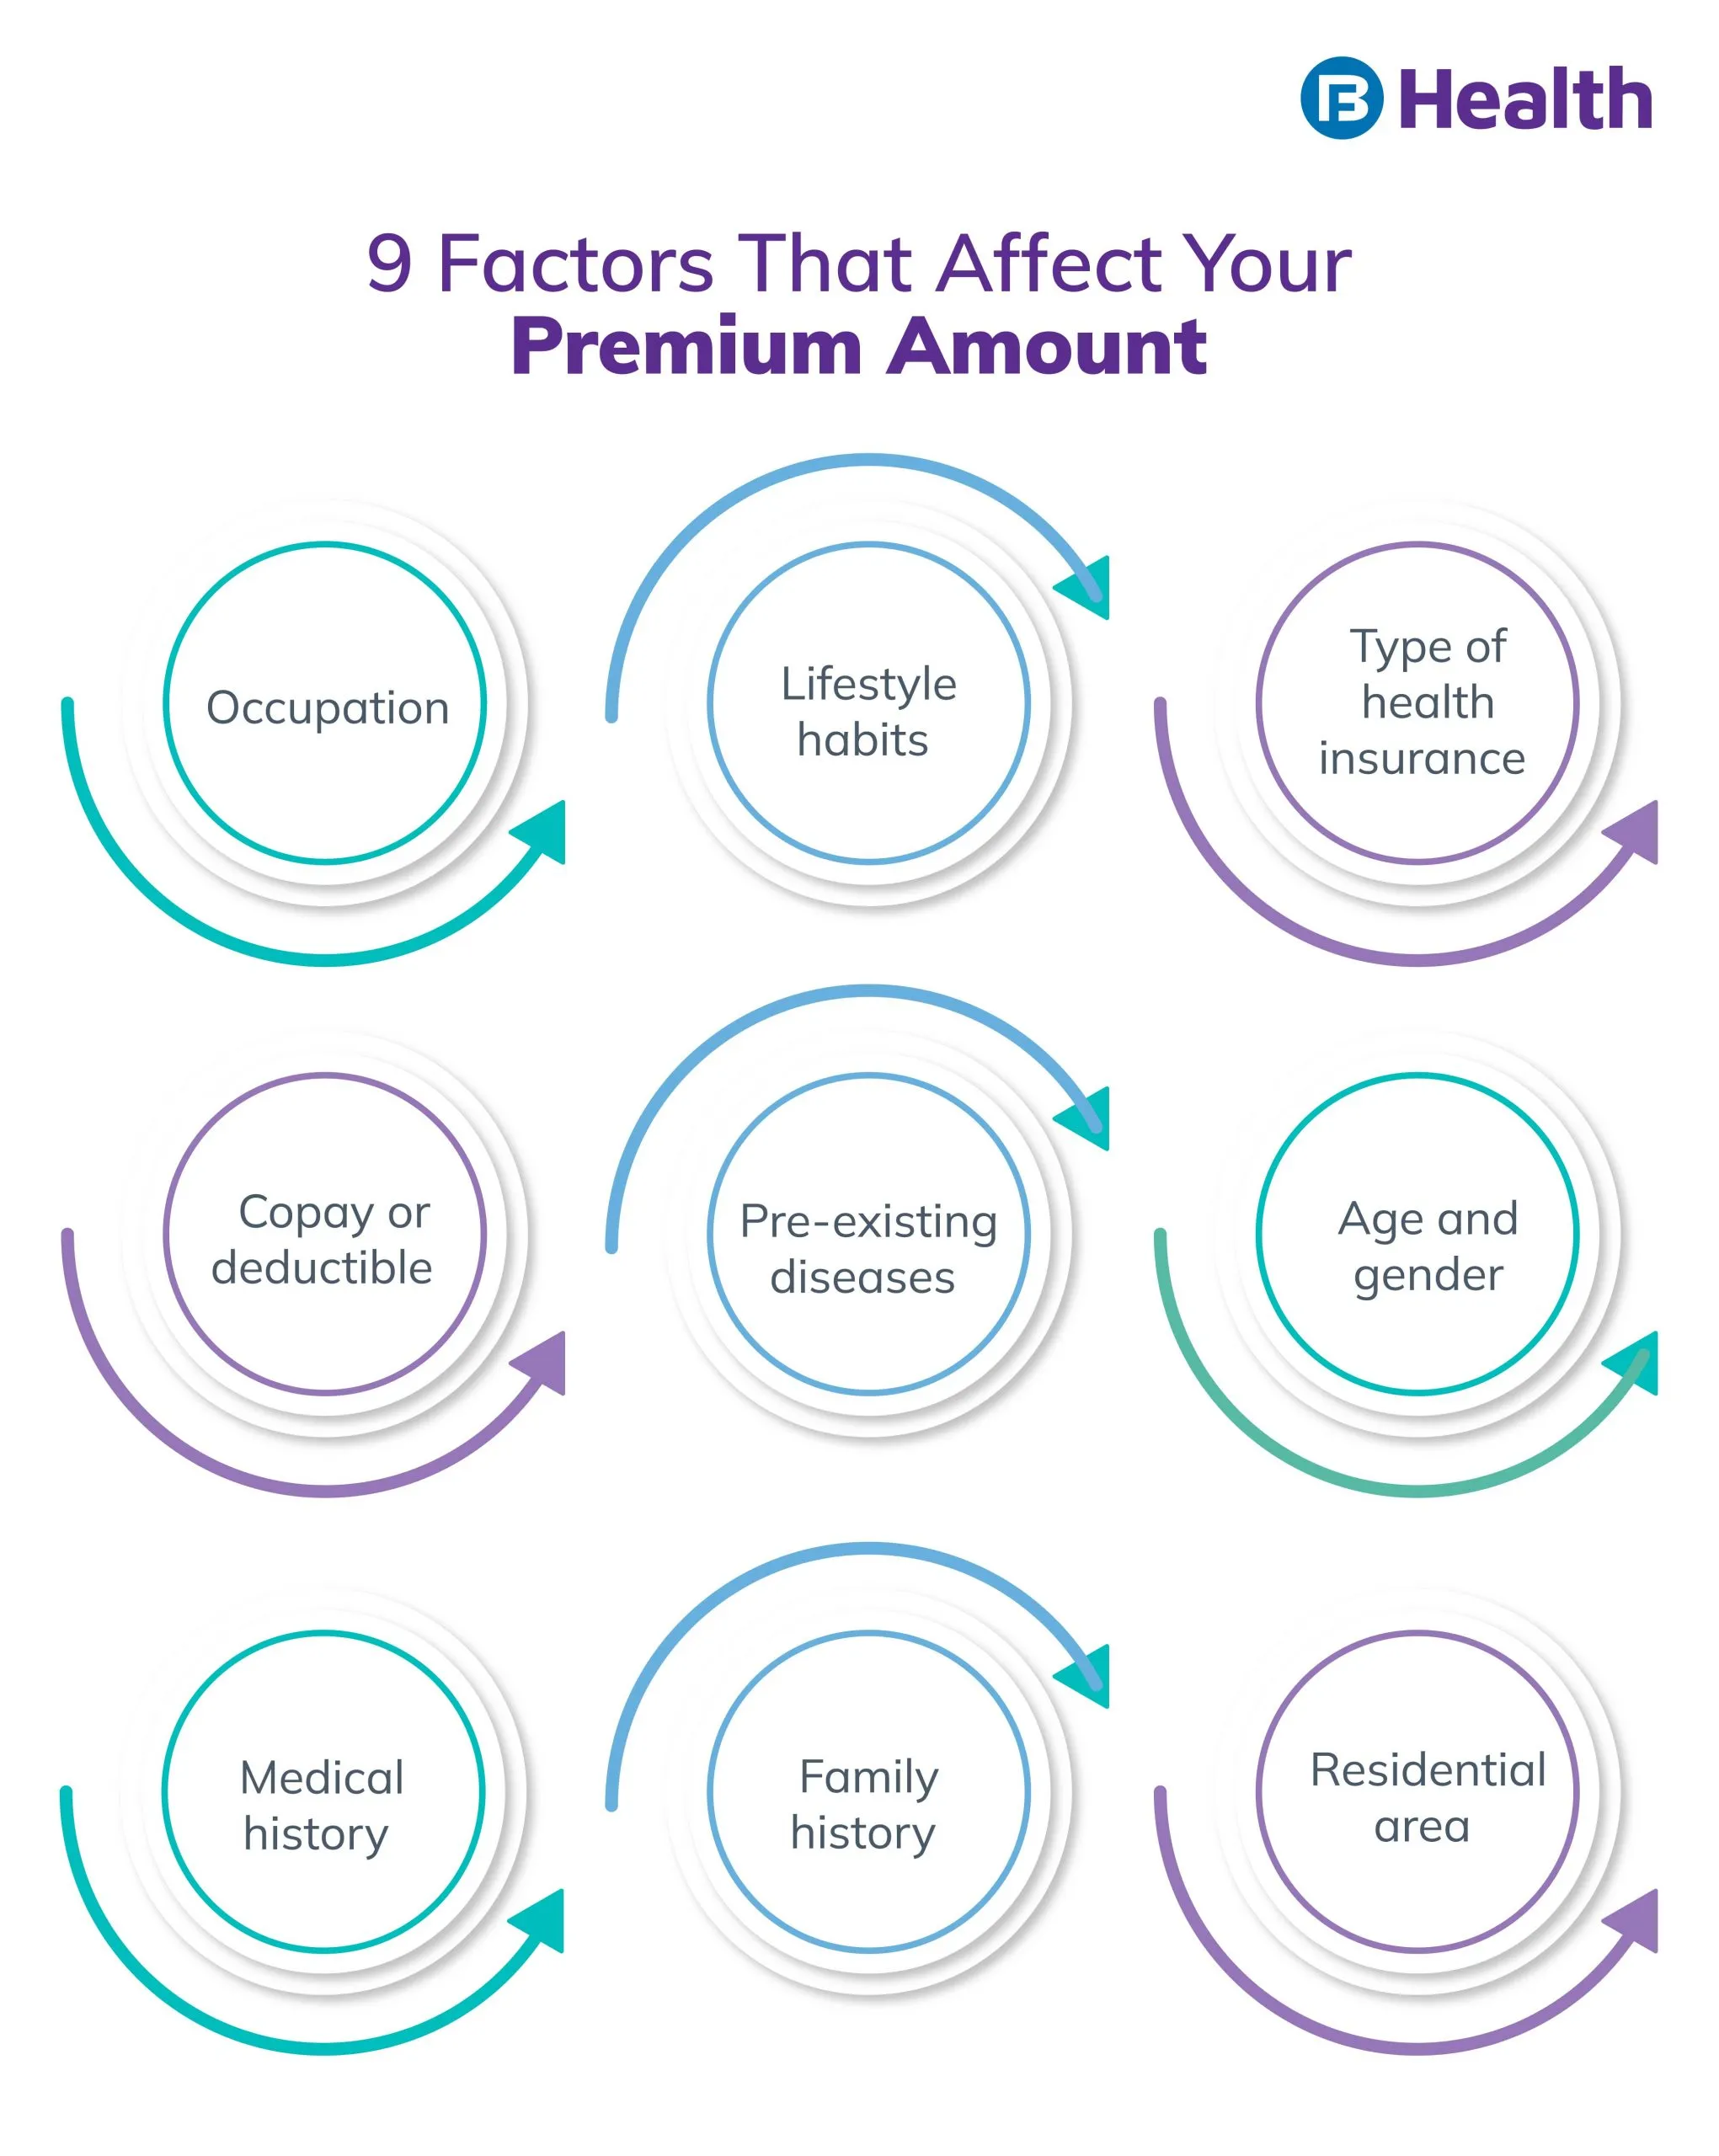 6 factors affect premium amount